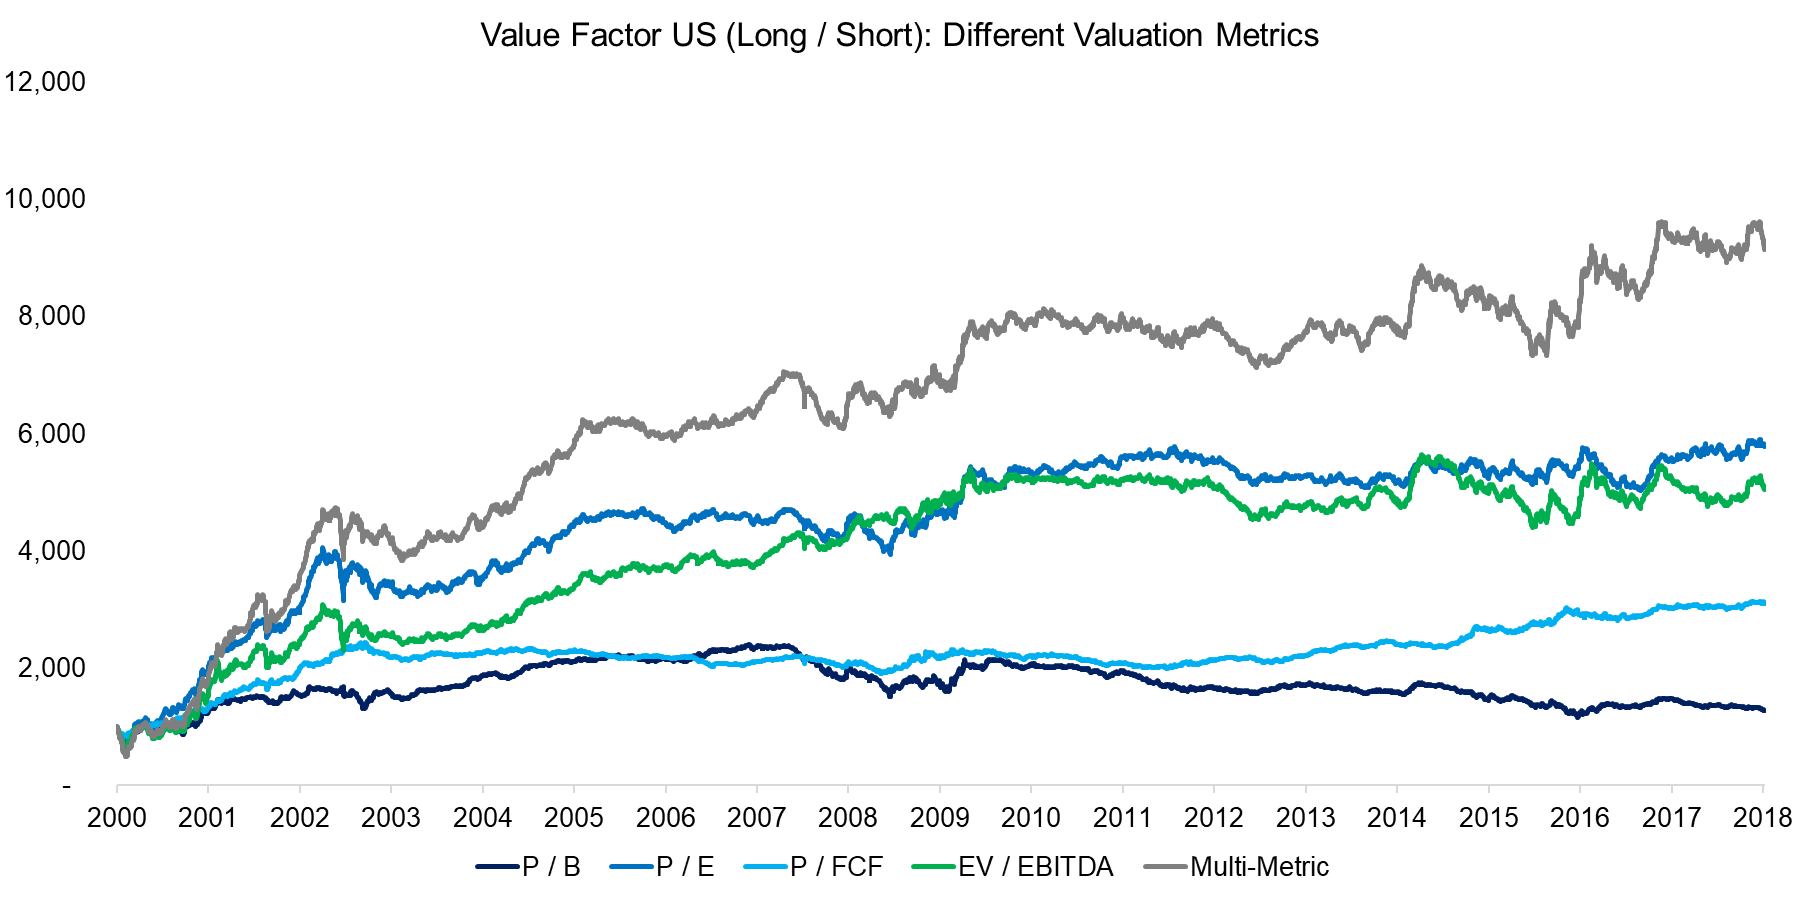 Value Factor US (Long Short) Different Valuation Metrics